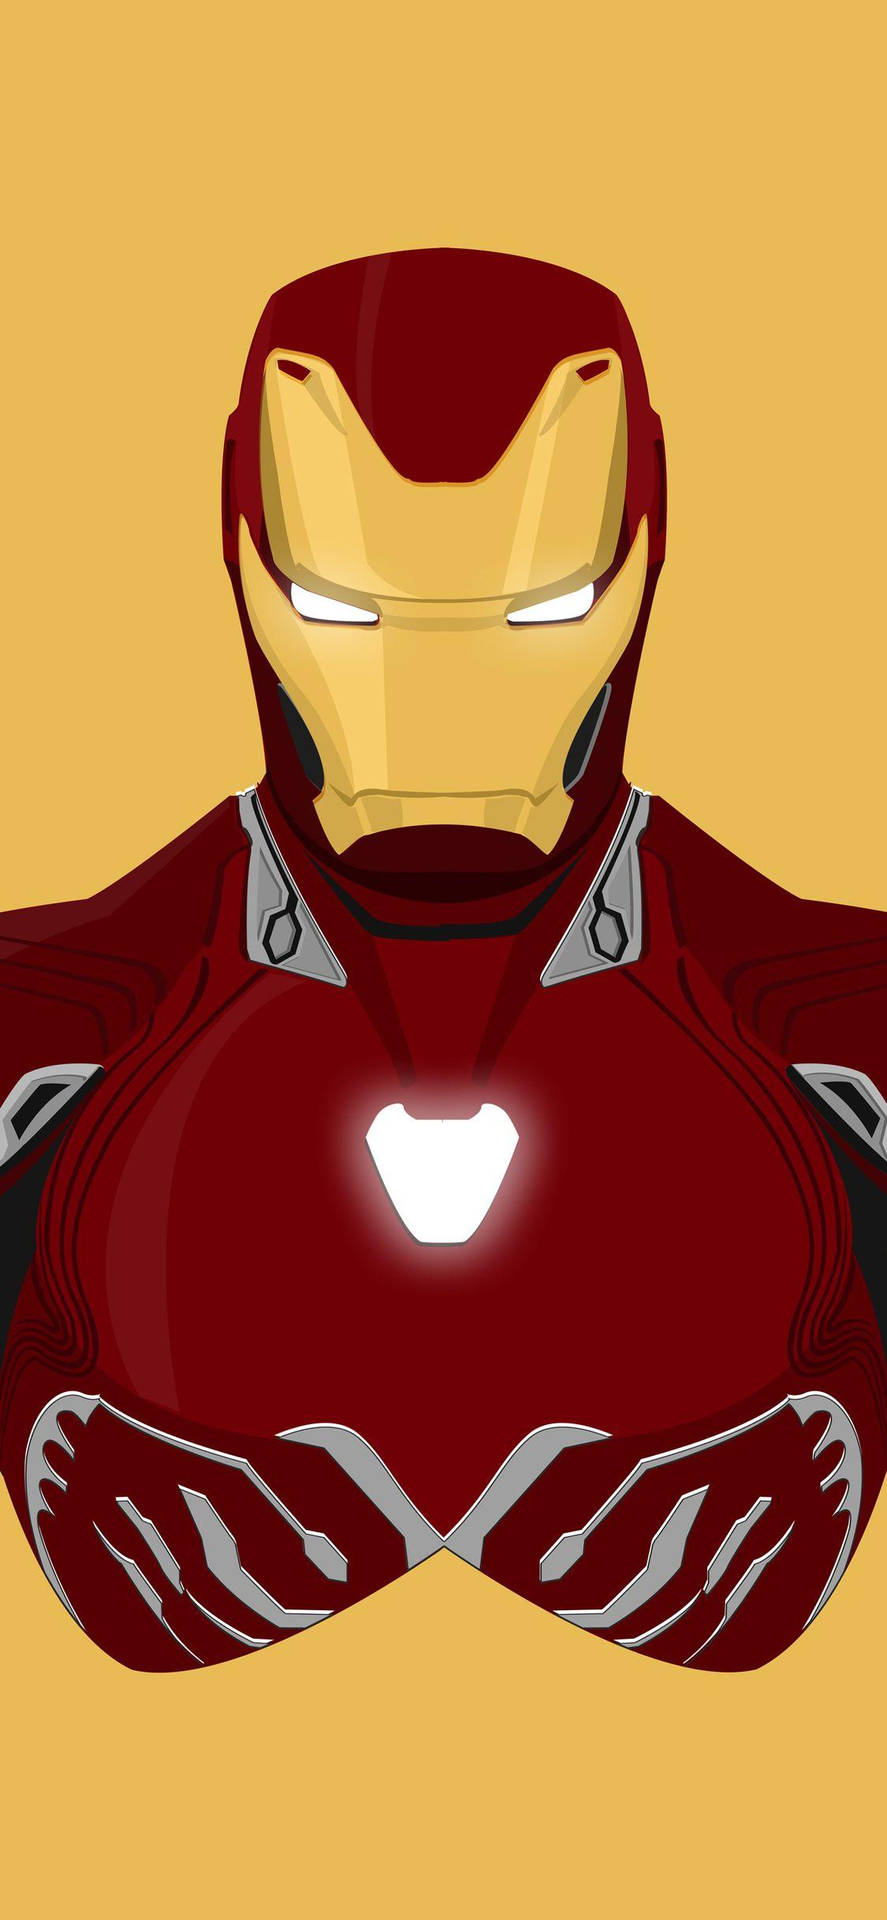 Aesthetic Iron Man Iphone Background